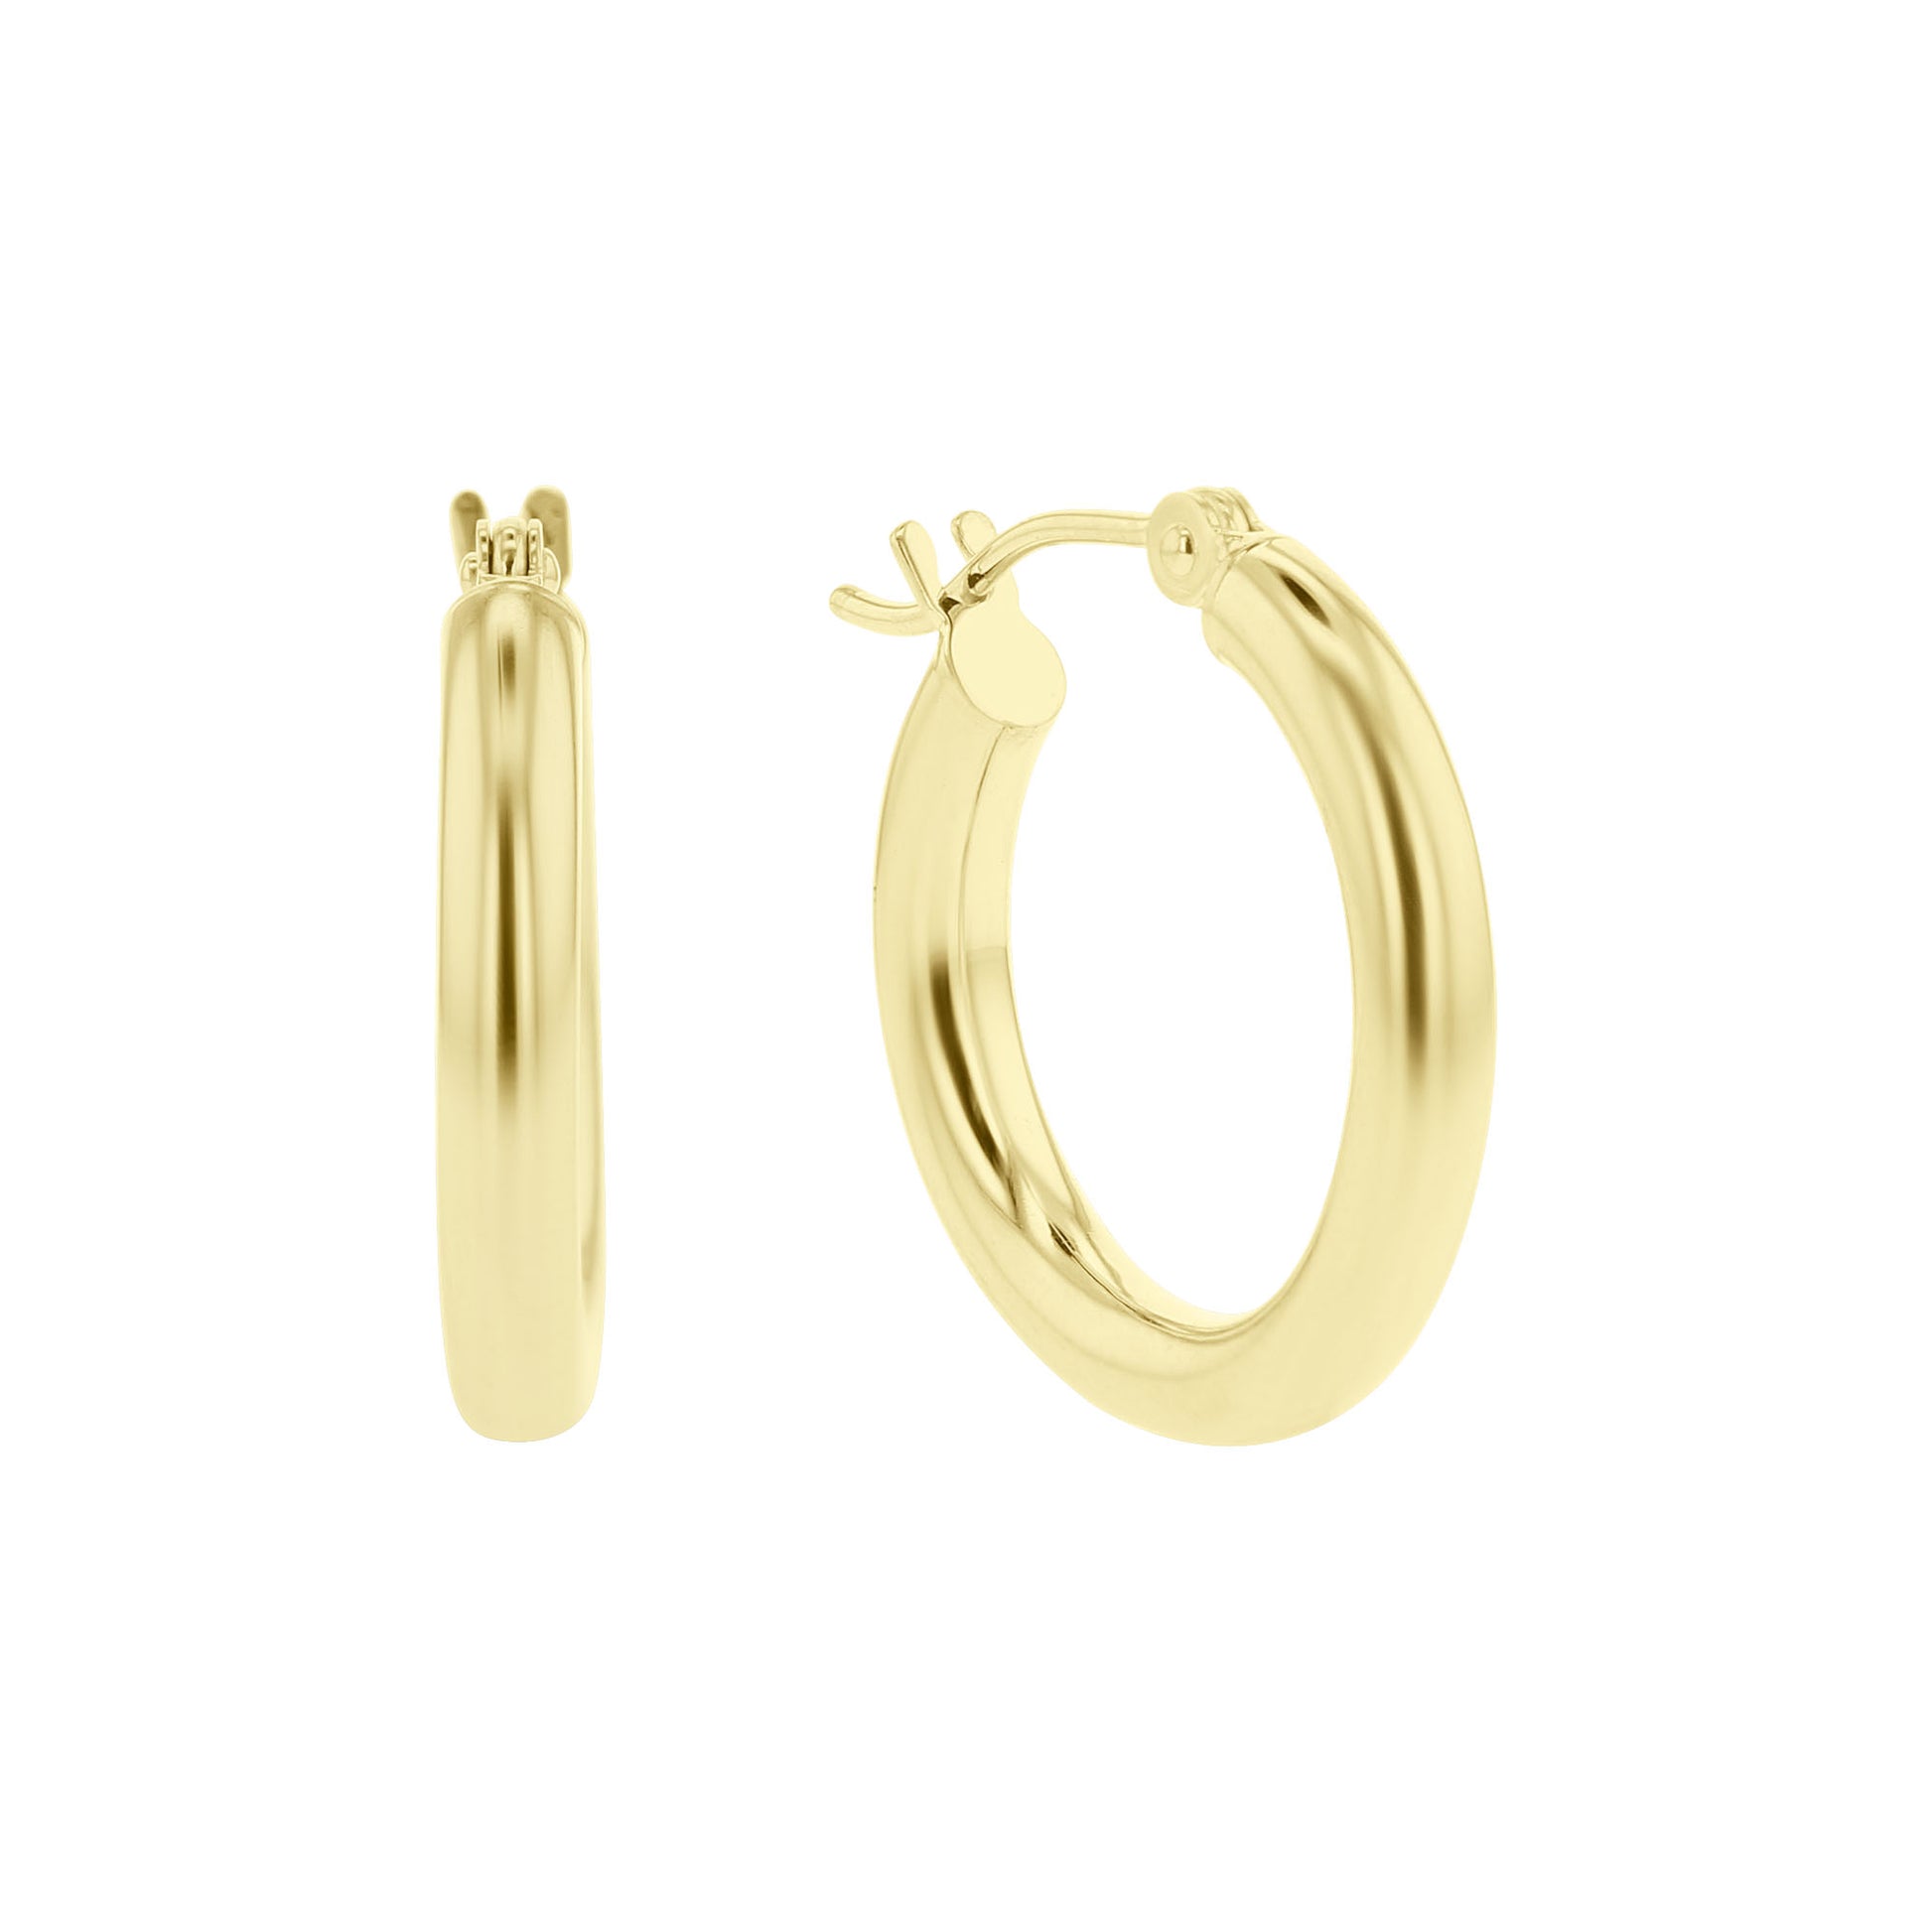 Classic Gold Hoop Earrings - 3x20mm